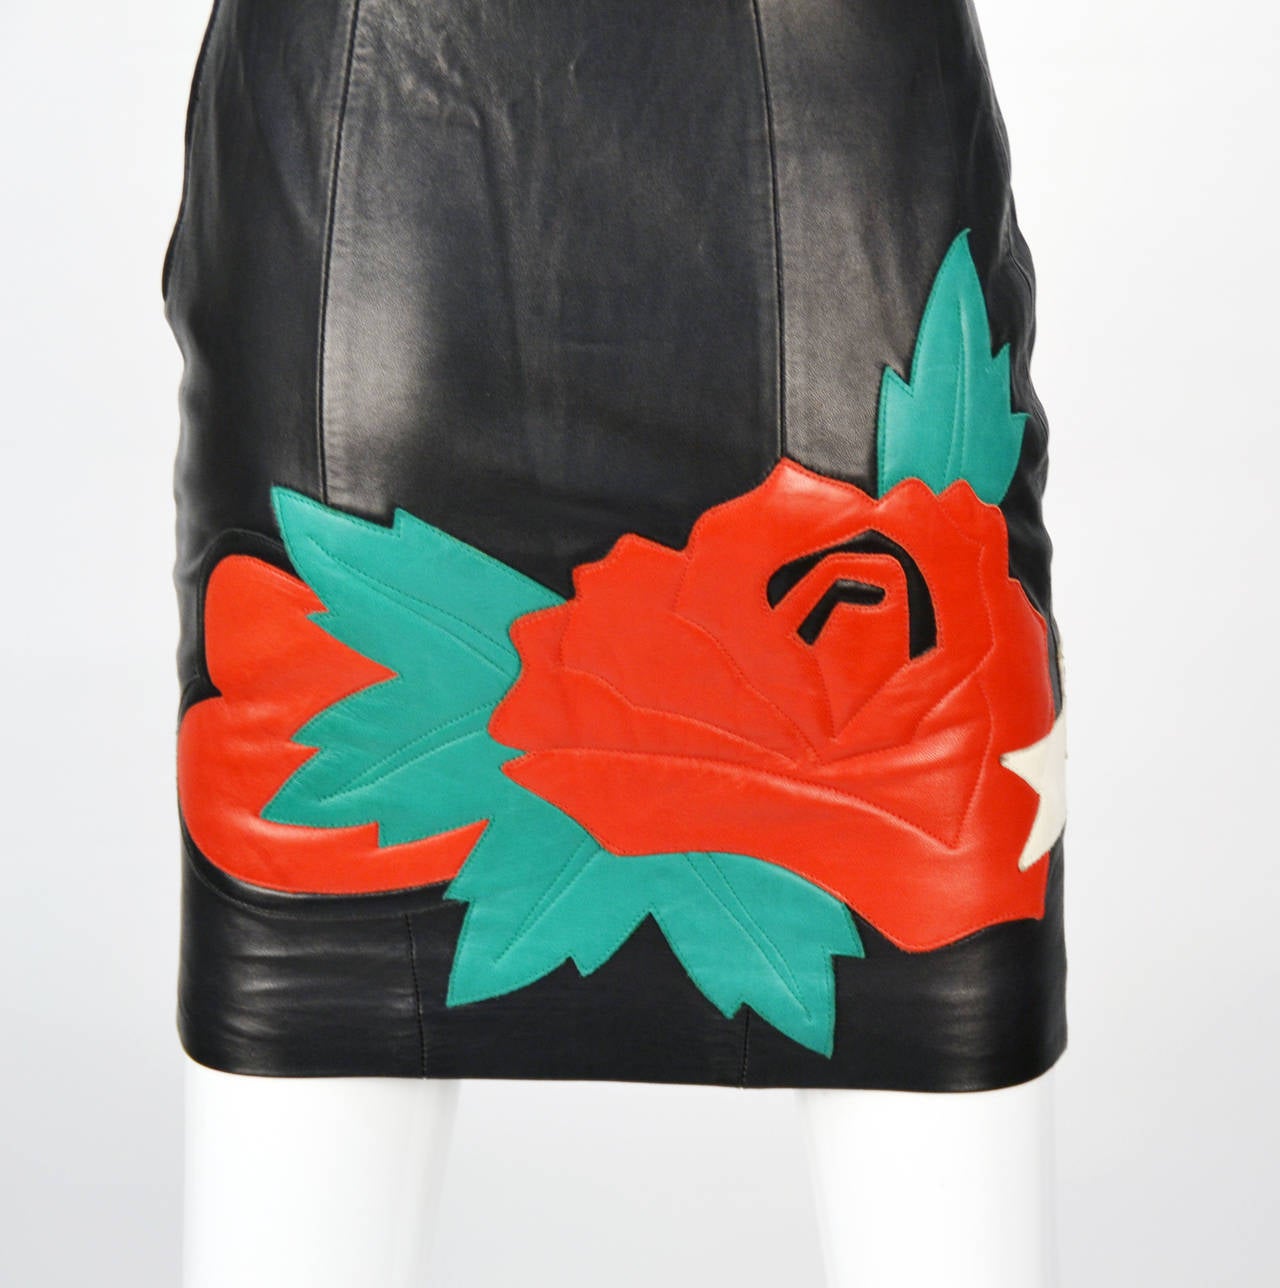 Women's 1990's Michael Hoban North Beach True Love Leather Dress